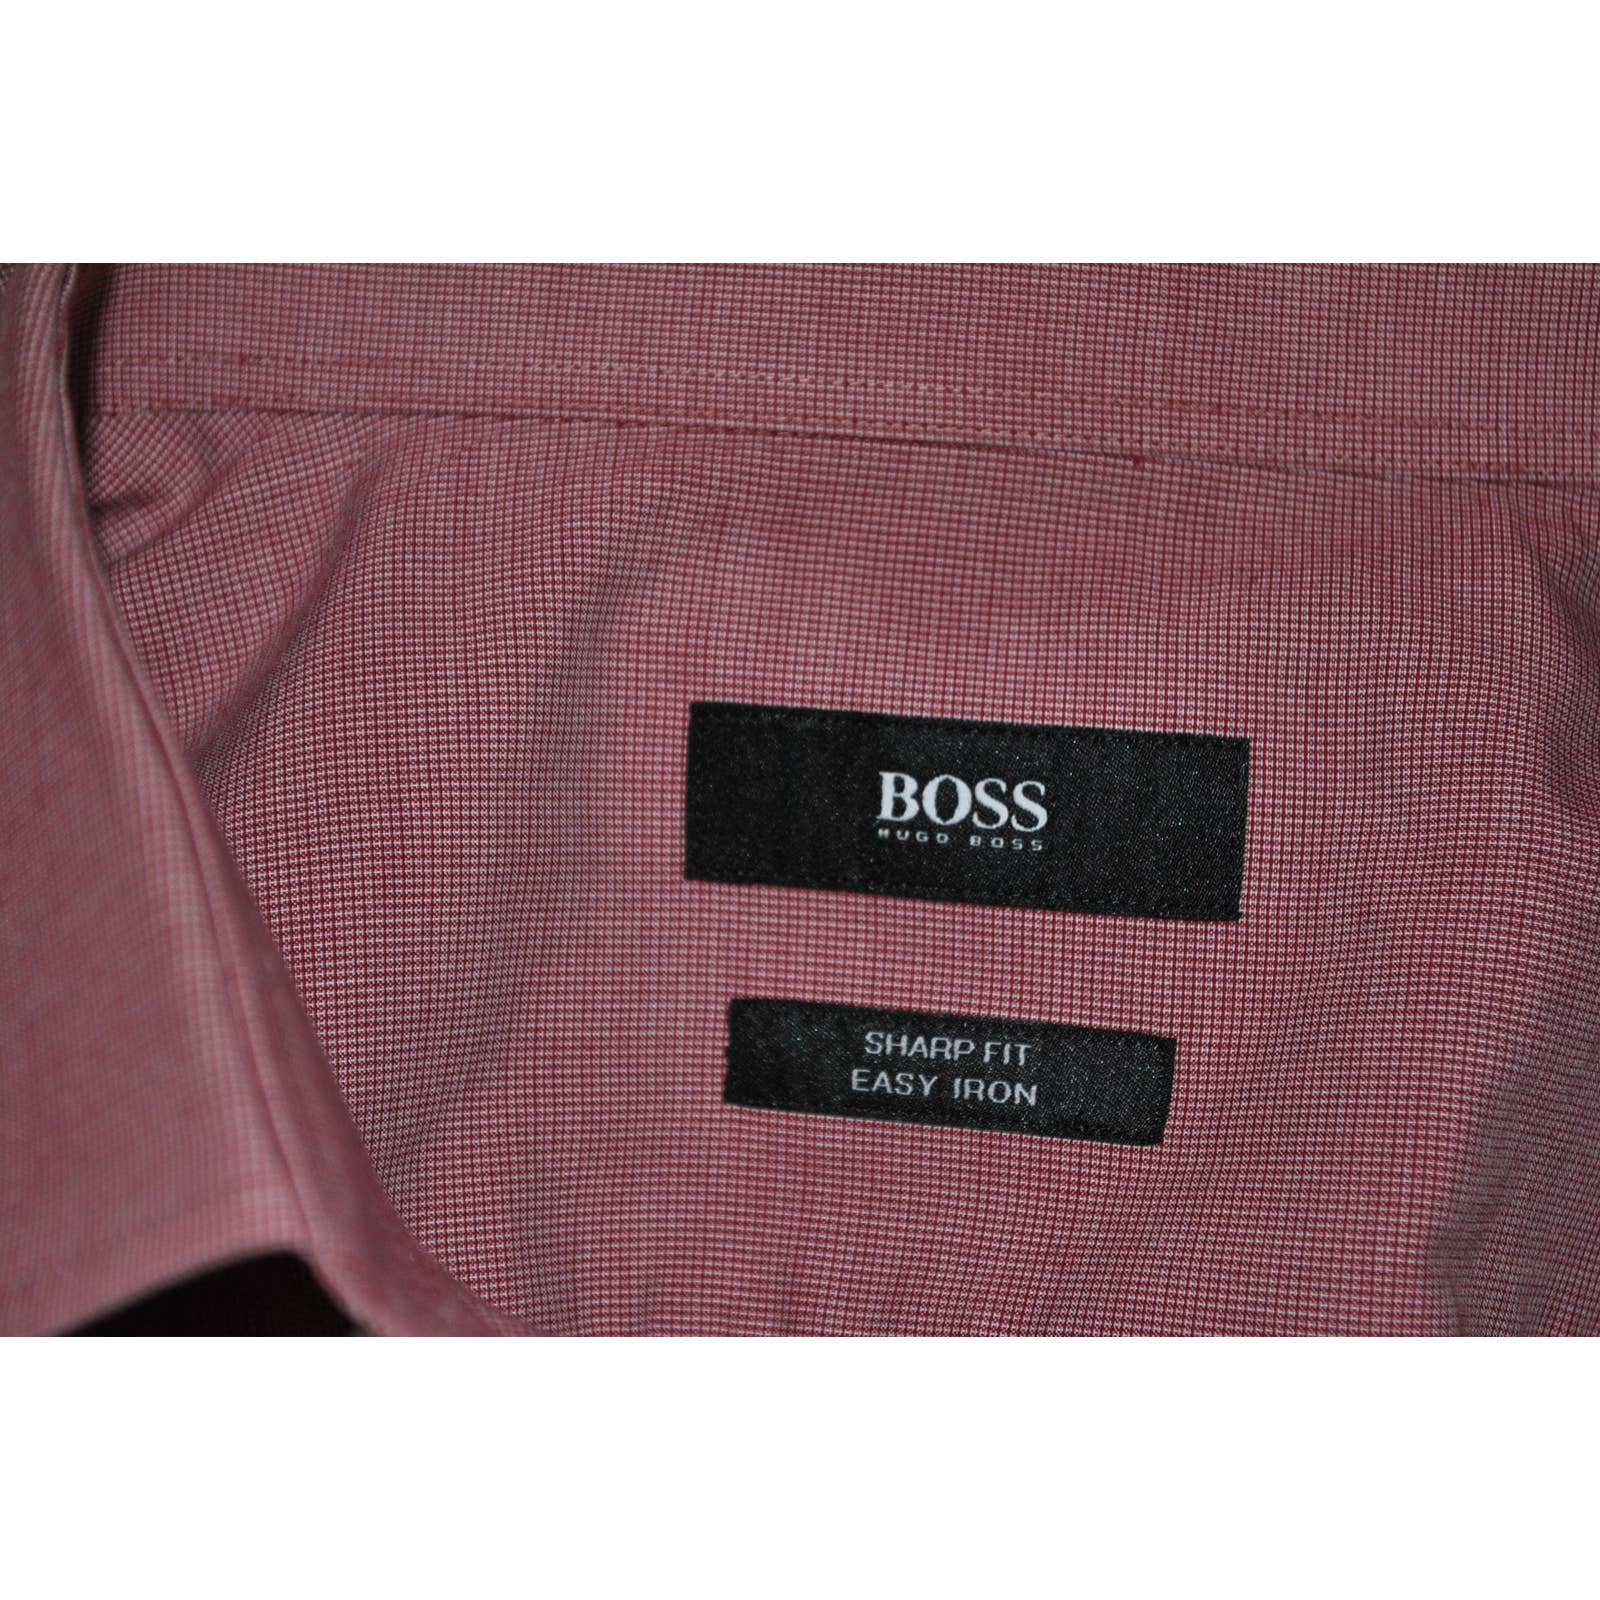 BOSS Hugo Boss Red White Micro Gingham Shirt - 16 34/35